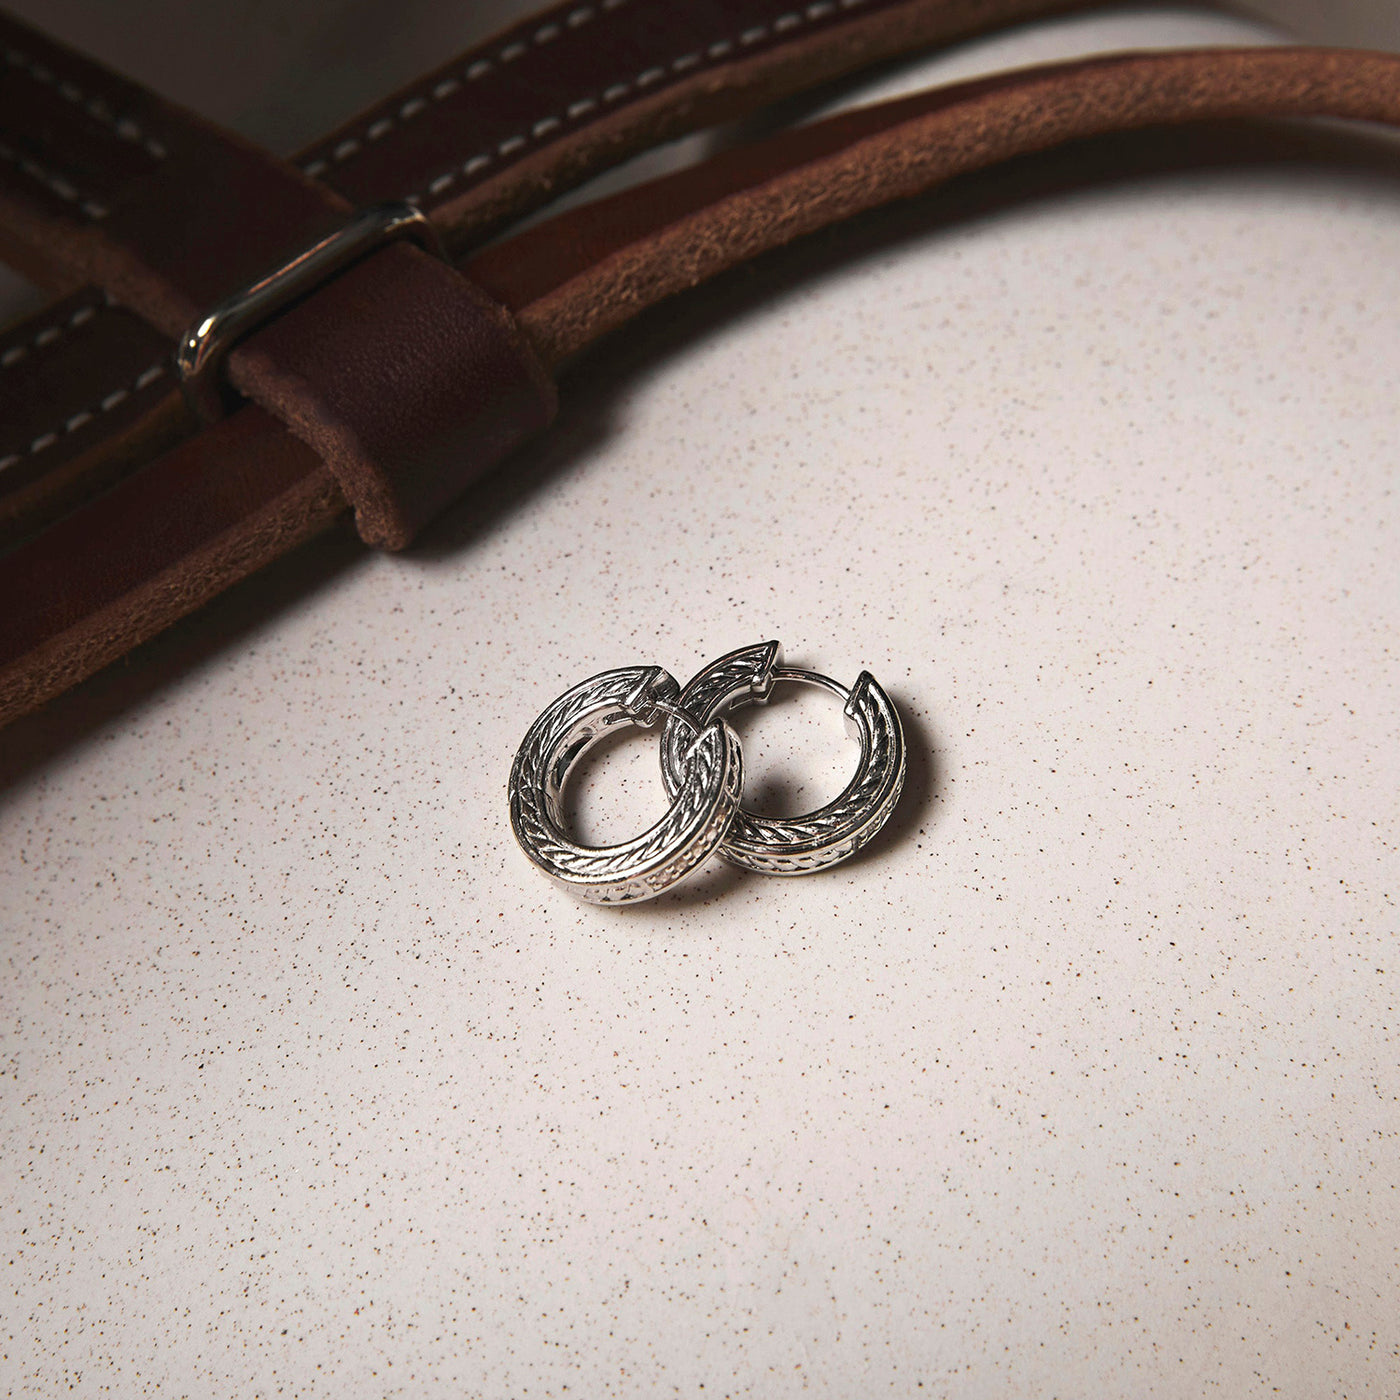 Judith Ripka Creations Sterling Silver Round Huggie Diamond Earrings – JESS0376-DI